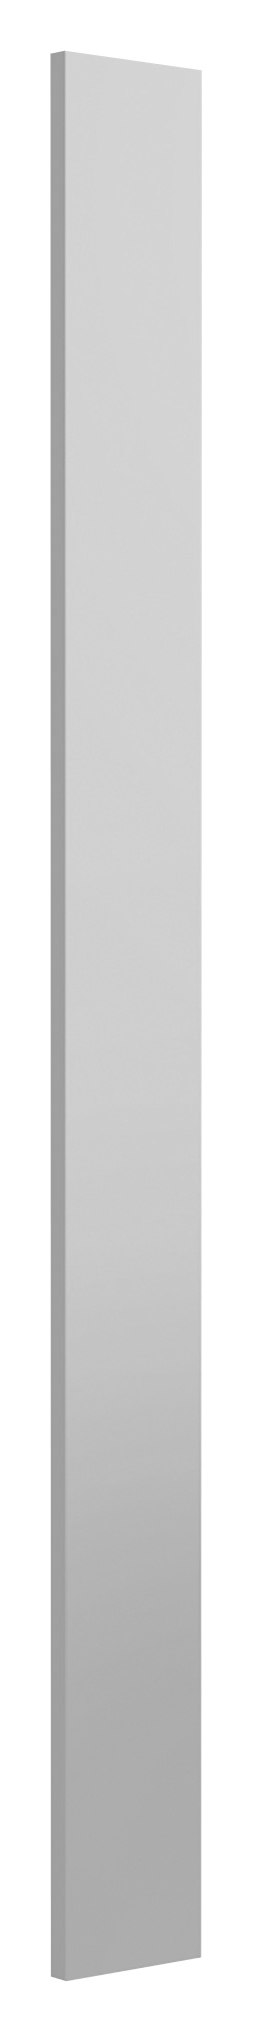 Image of Spacepro Wardrobe Multi Purpose Liner Dove Grey - 2800mm x 90mm x 18mm